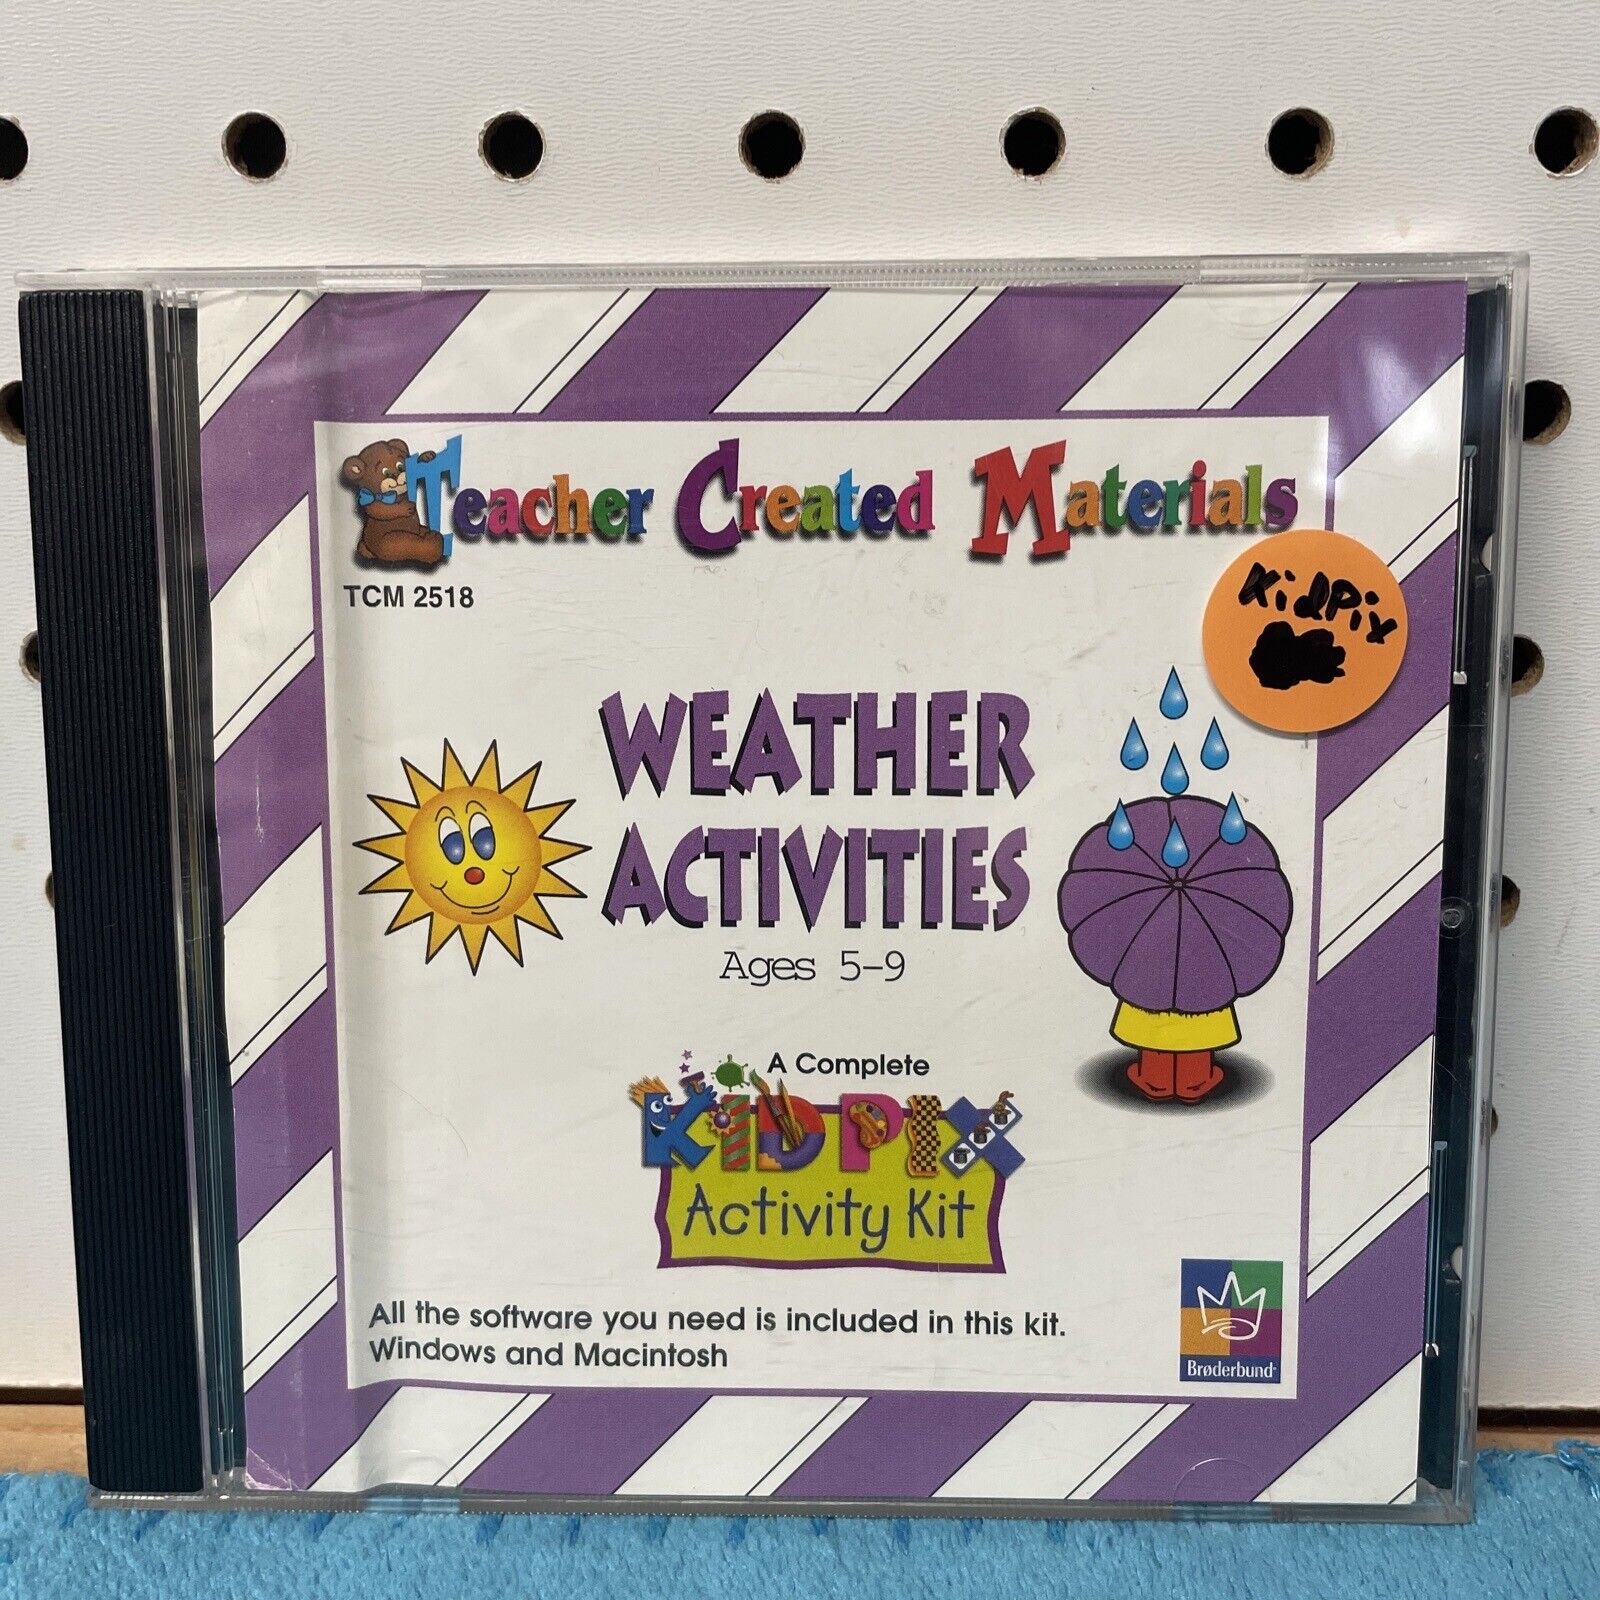 WEATHER ACTIVITIES PC CD-ROM BY BRODERBUND, KID PIX ACTIVITY KIT,TEACHER CREATED